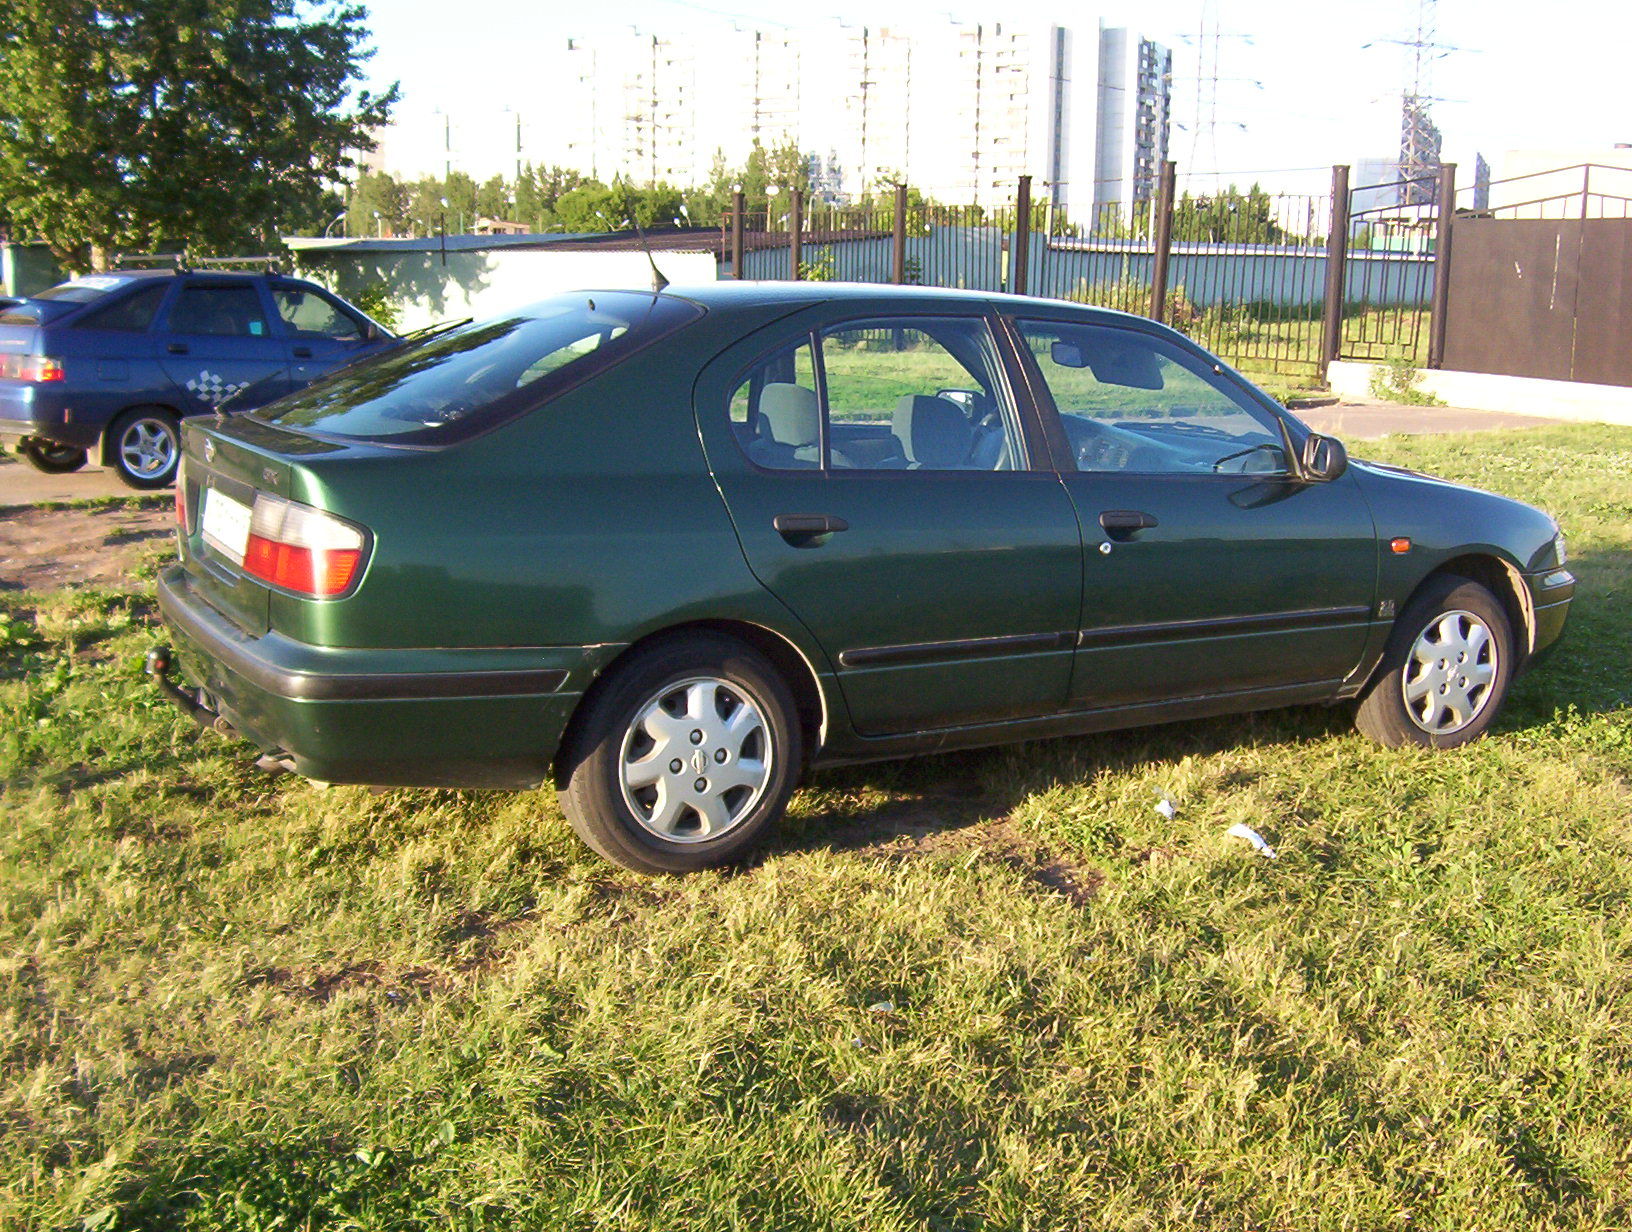 1996 Nissan Primera